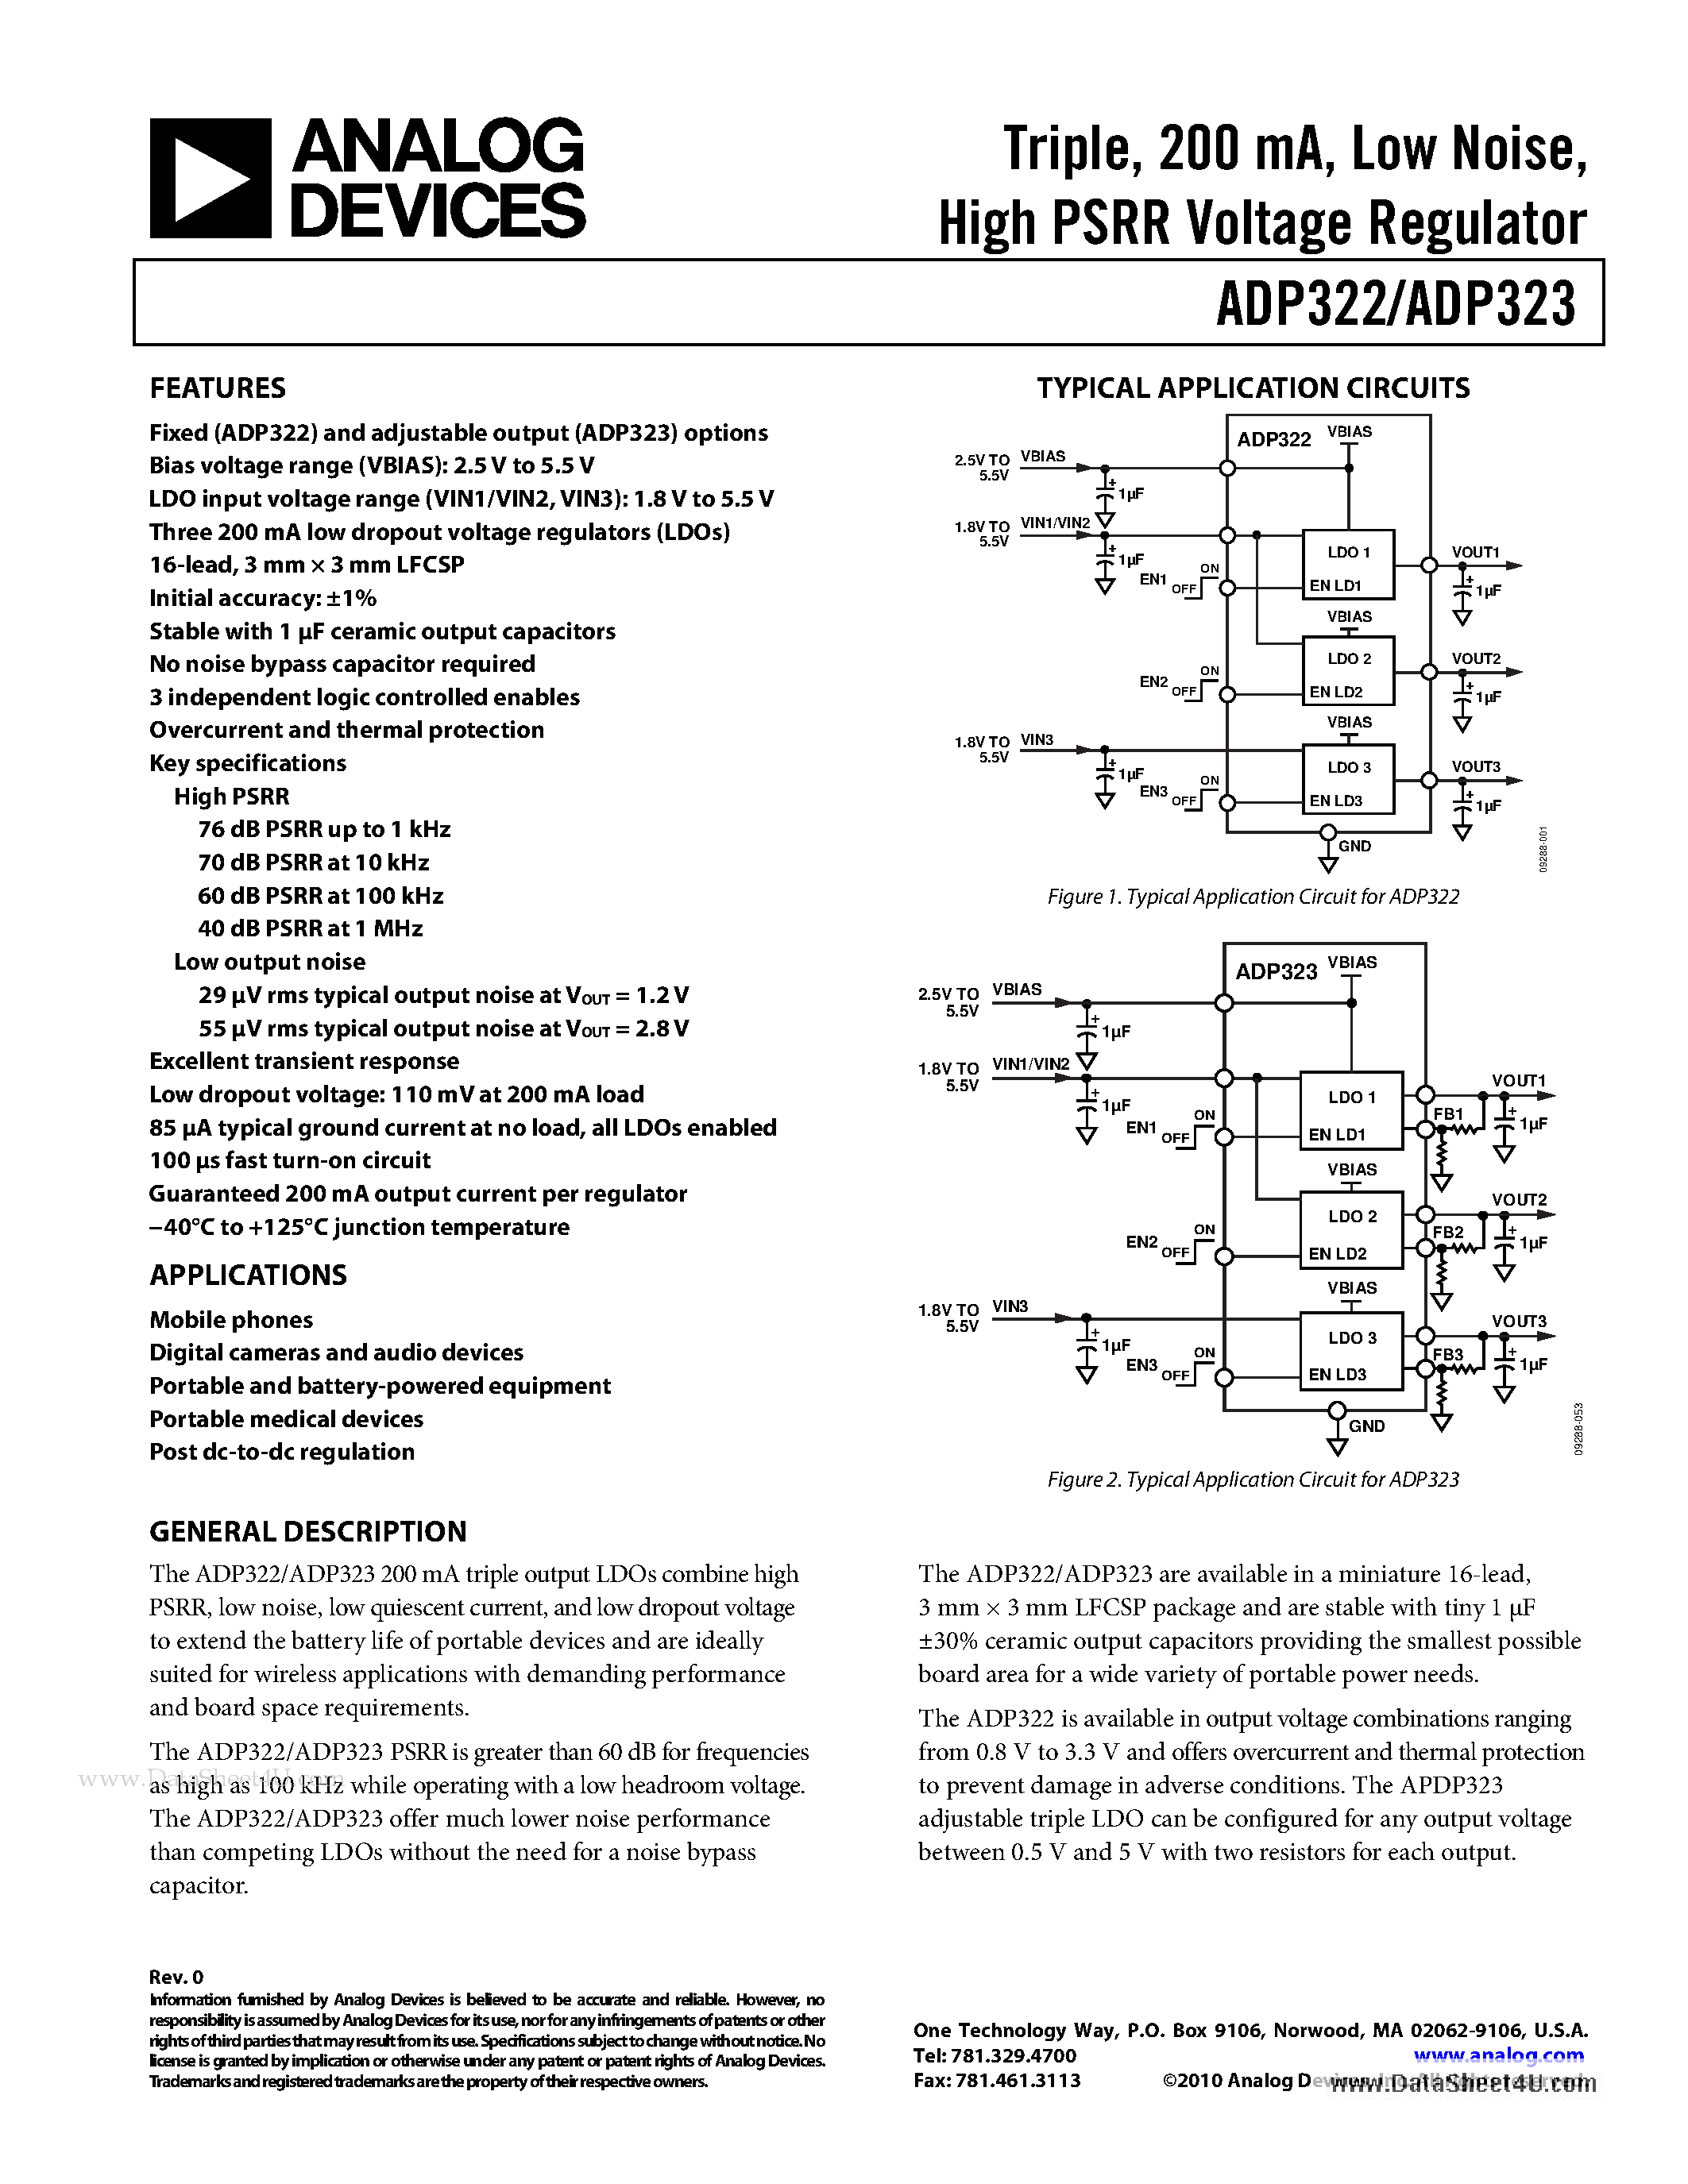 Datasheet ADP322 - (ADP322 / ADP323) High PSRR Voltage Regulator page 1